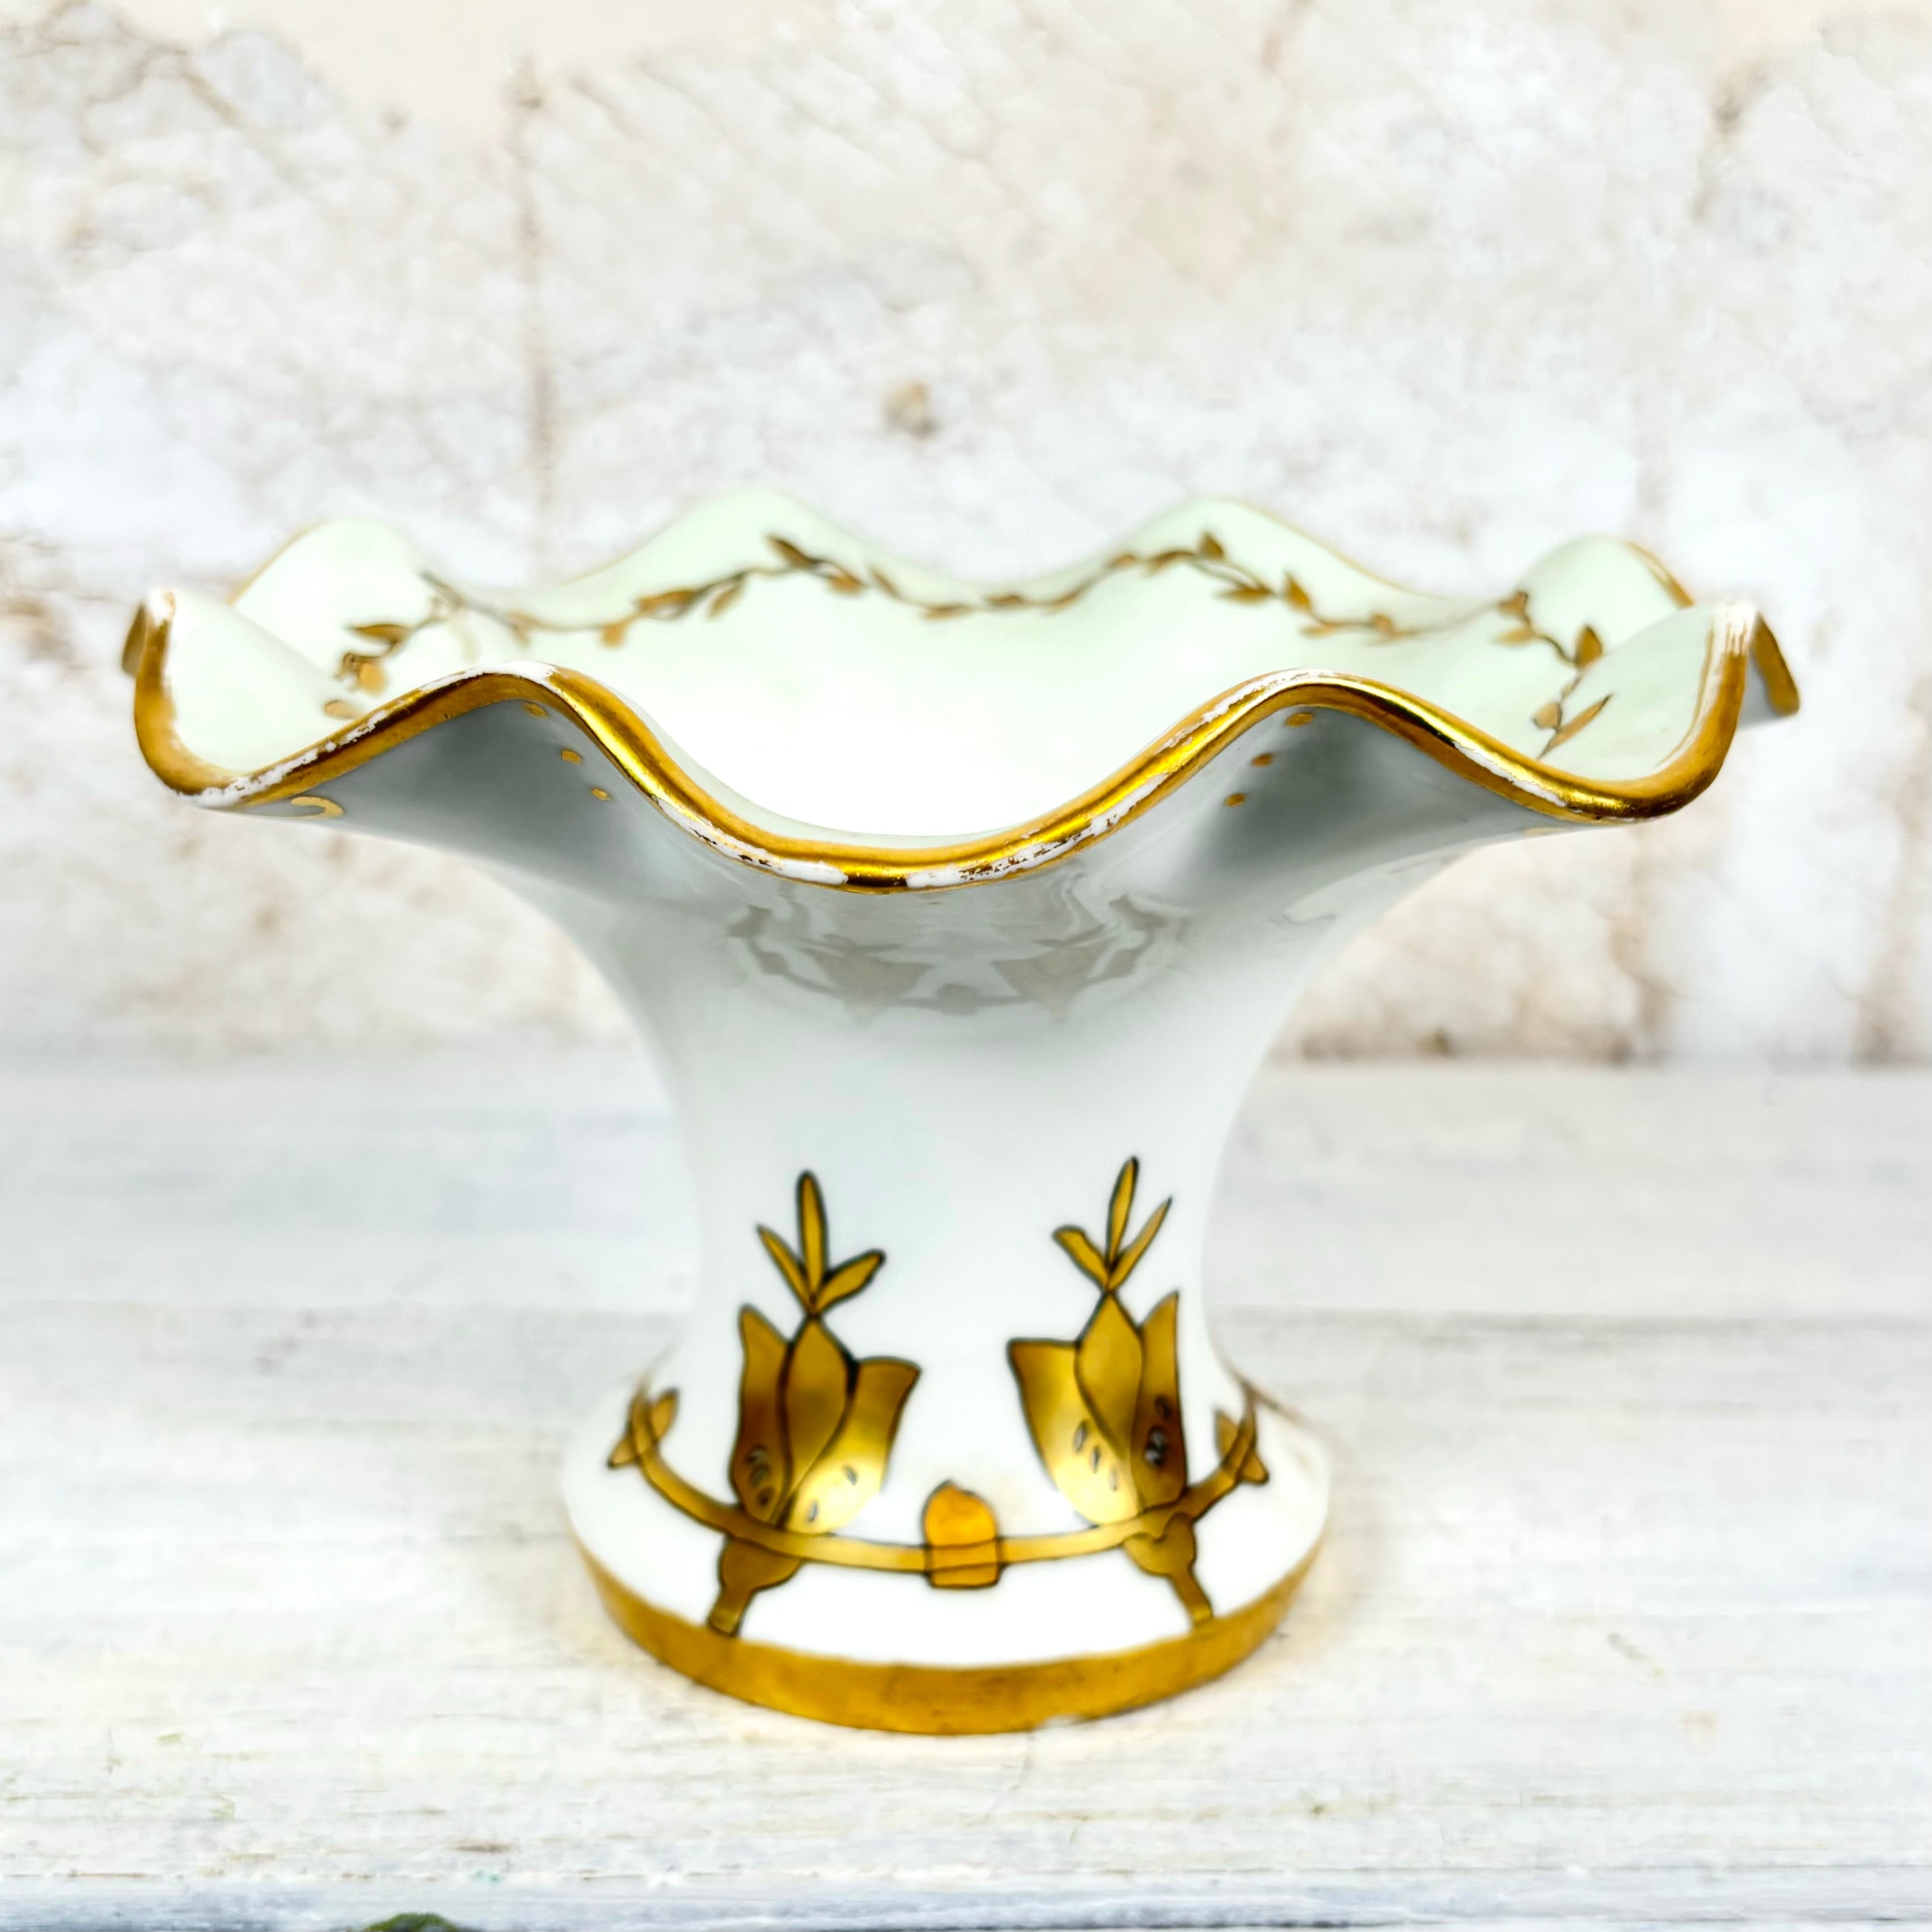 Vintage Signed Pale Blue Porcelain with Gold Edge